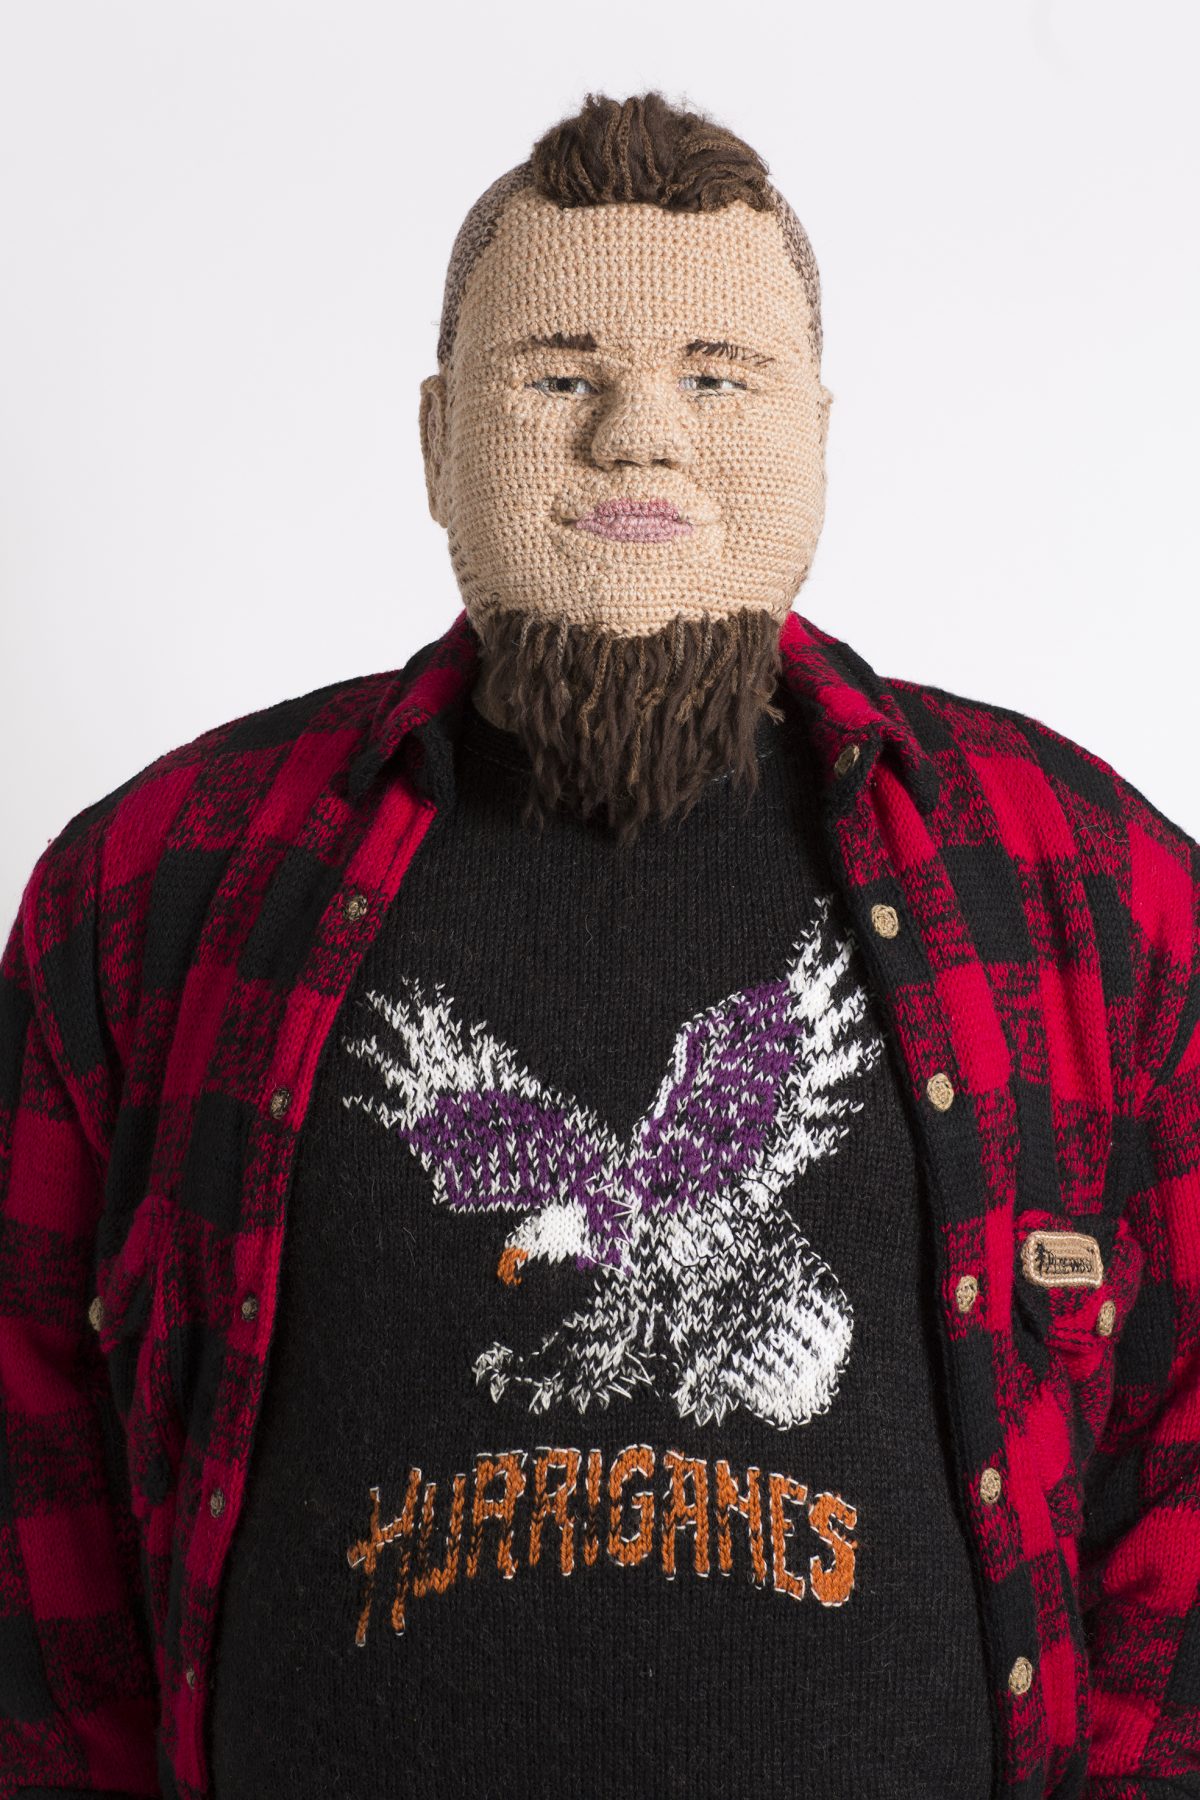 Crocheted Figures by Liisa Hietanen Village